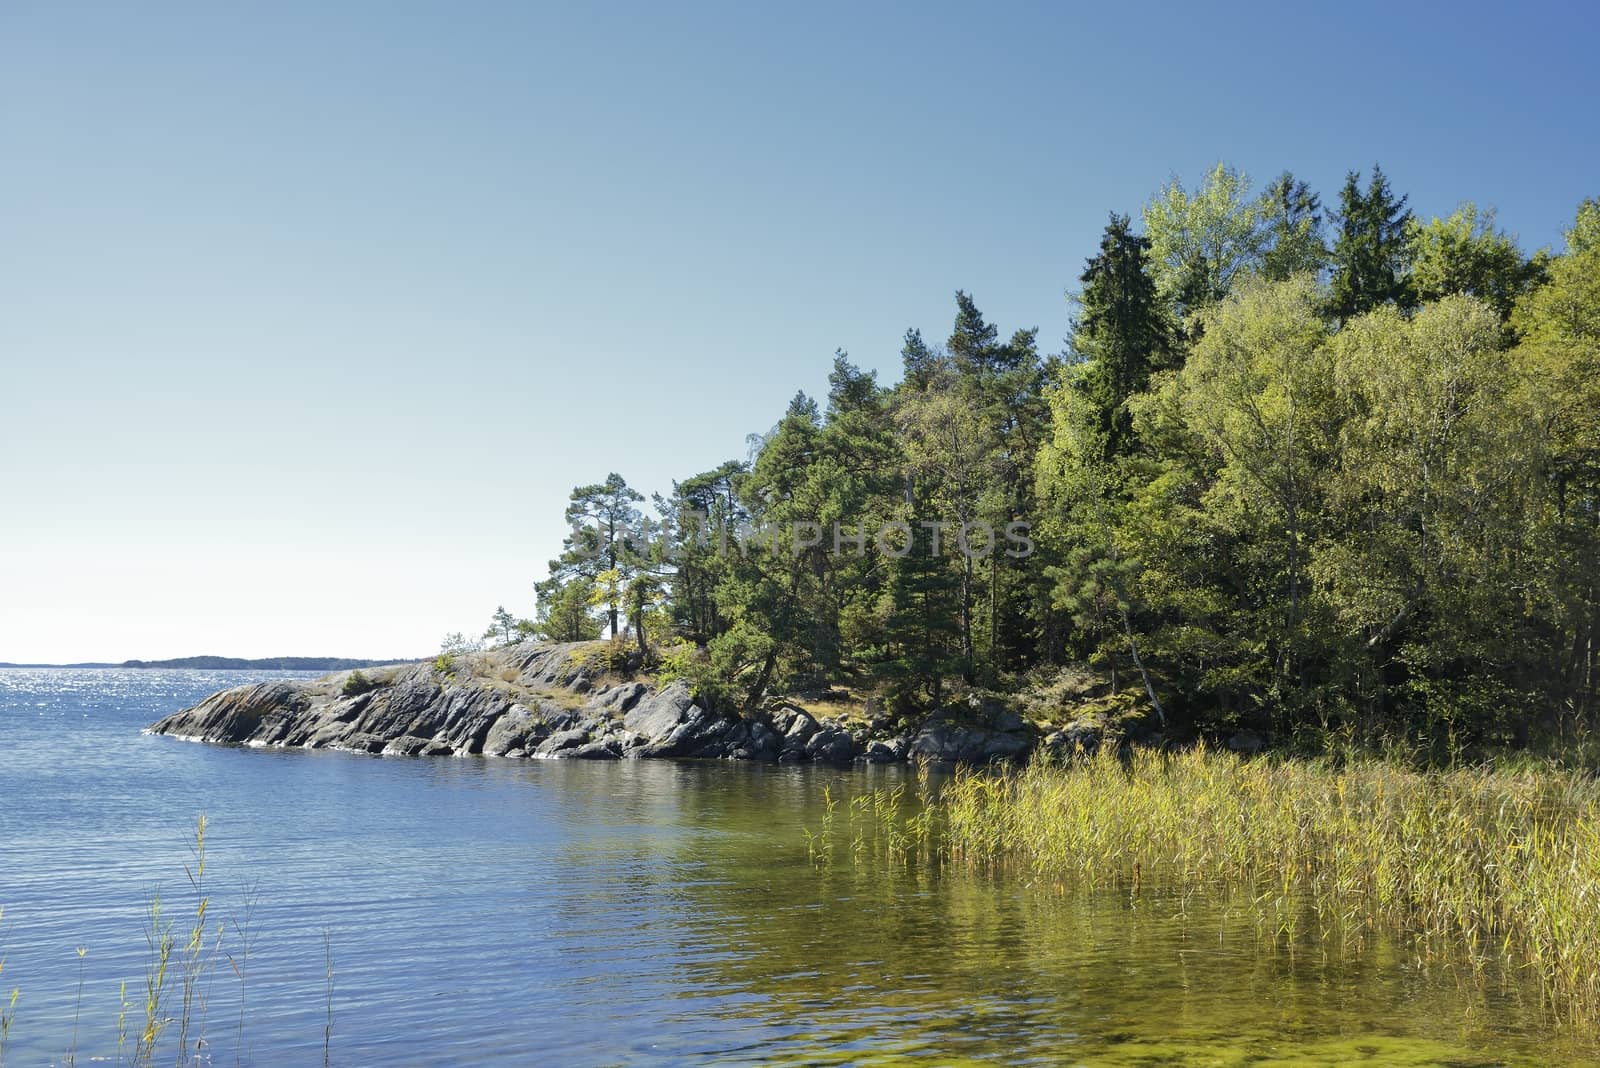 Seascape, Stockholm archipelago.